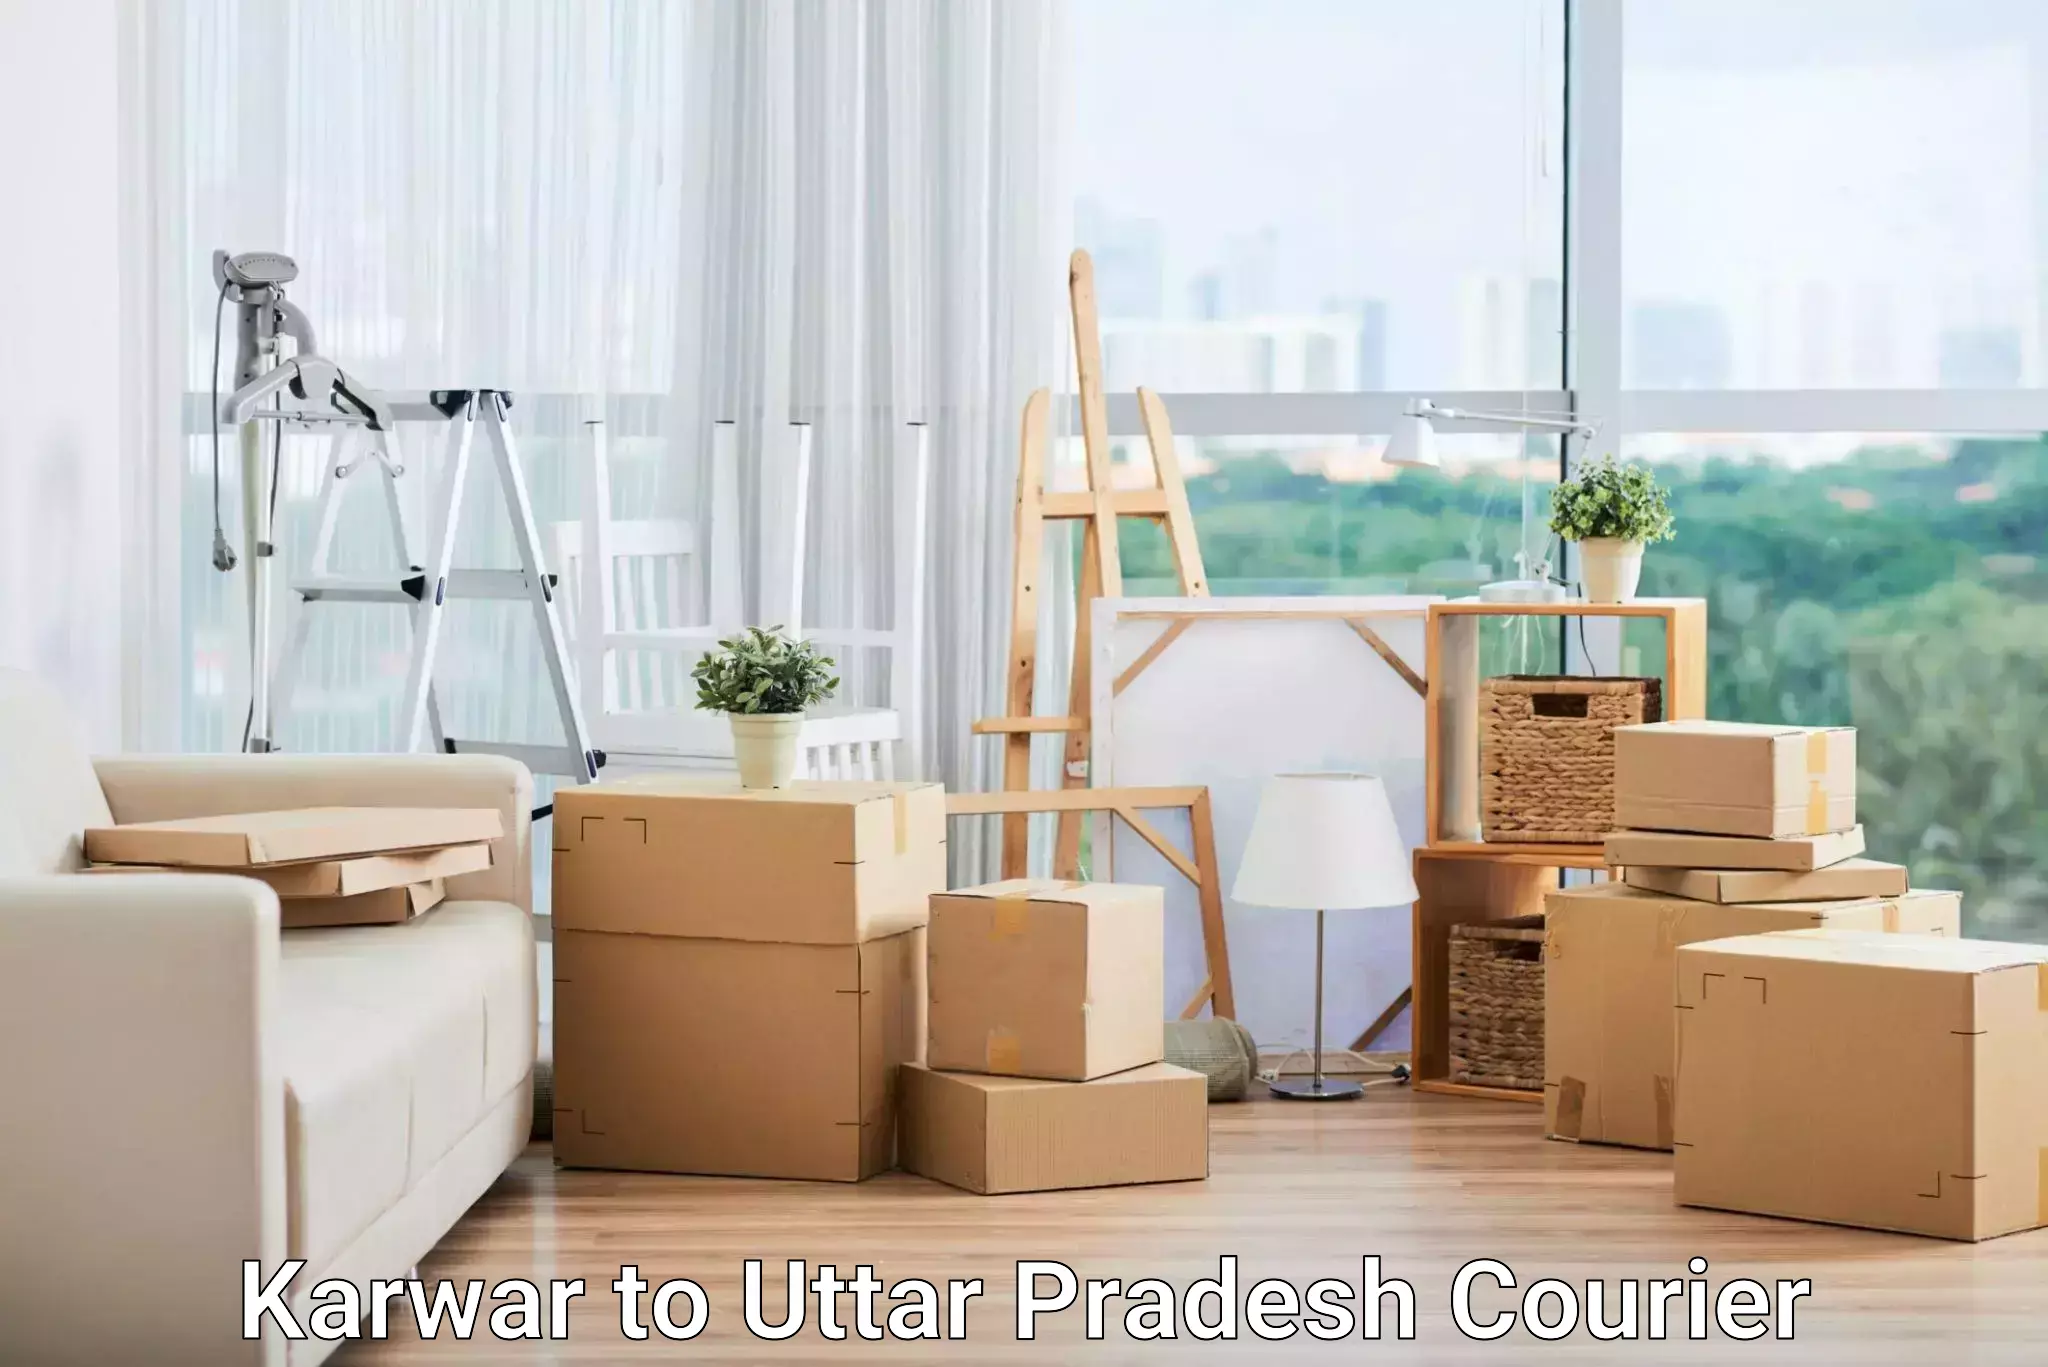 User-friendly delivery service Karwar to Uttar Pradesh